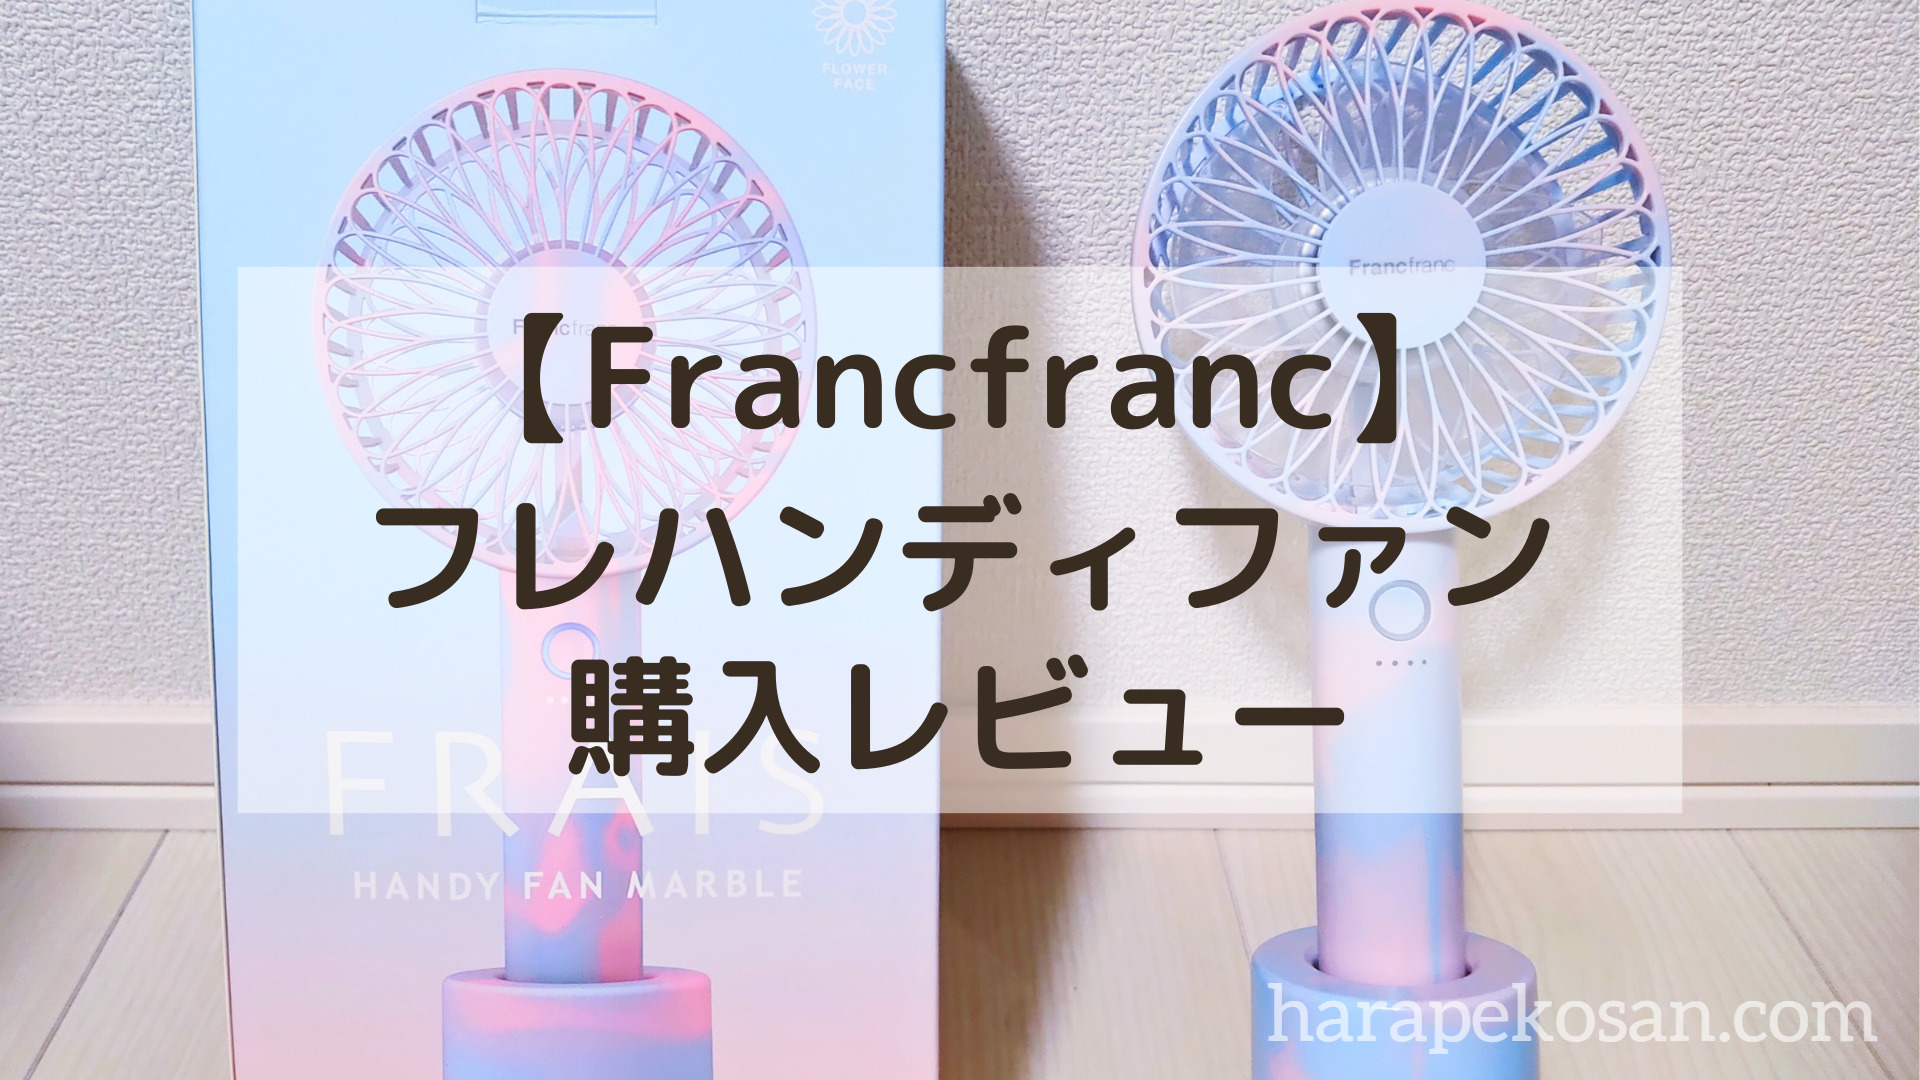 Franc franc 【2020年版】フレ ハンディーファンを買ってみた 